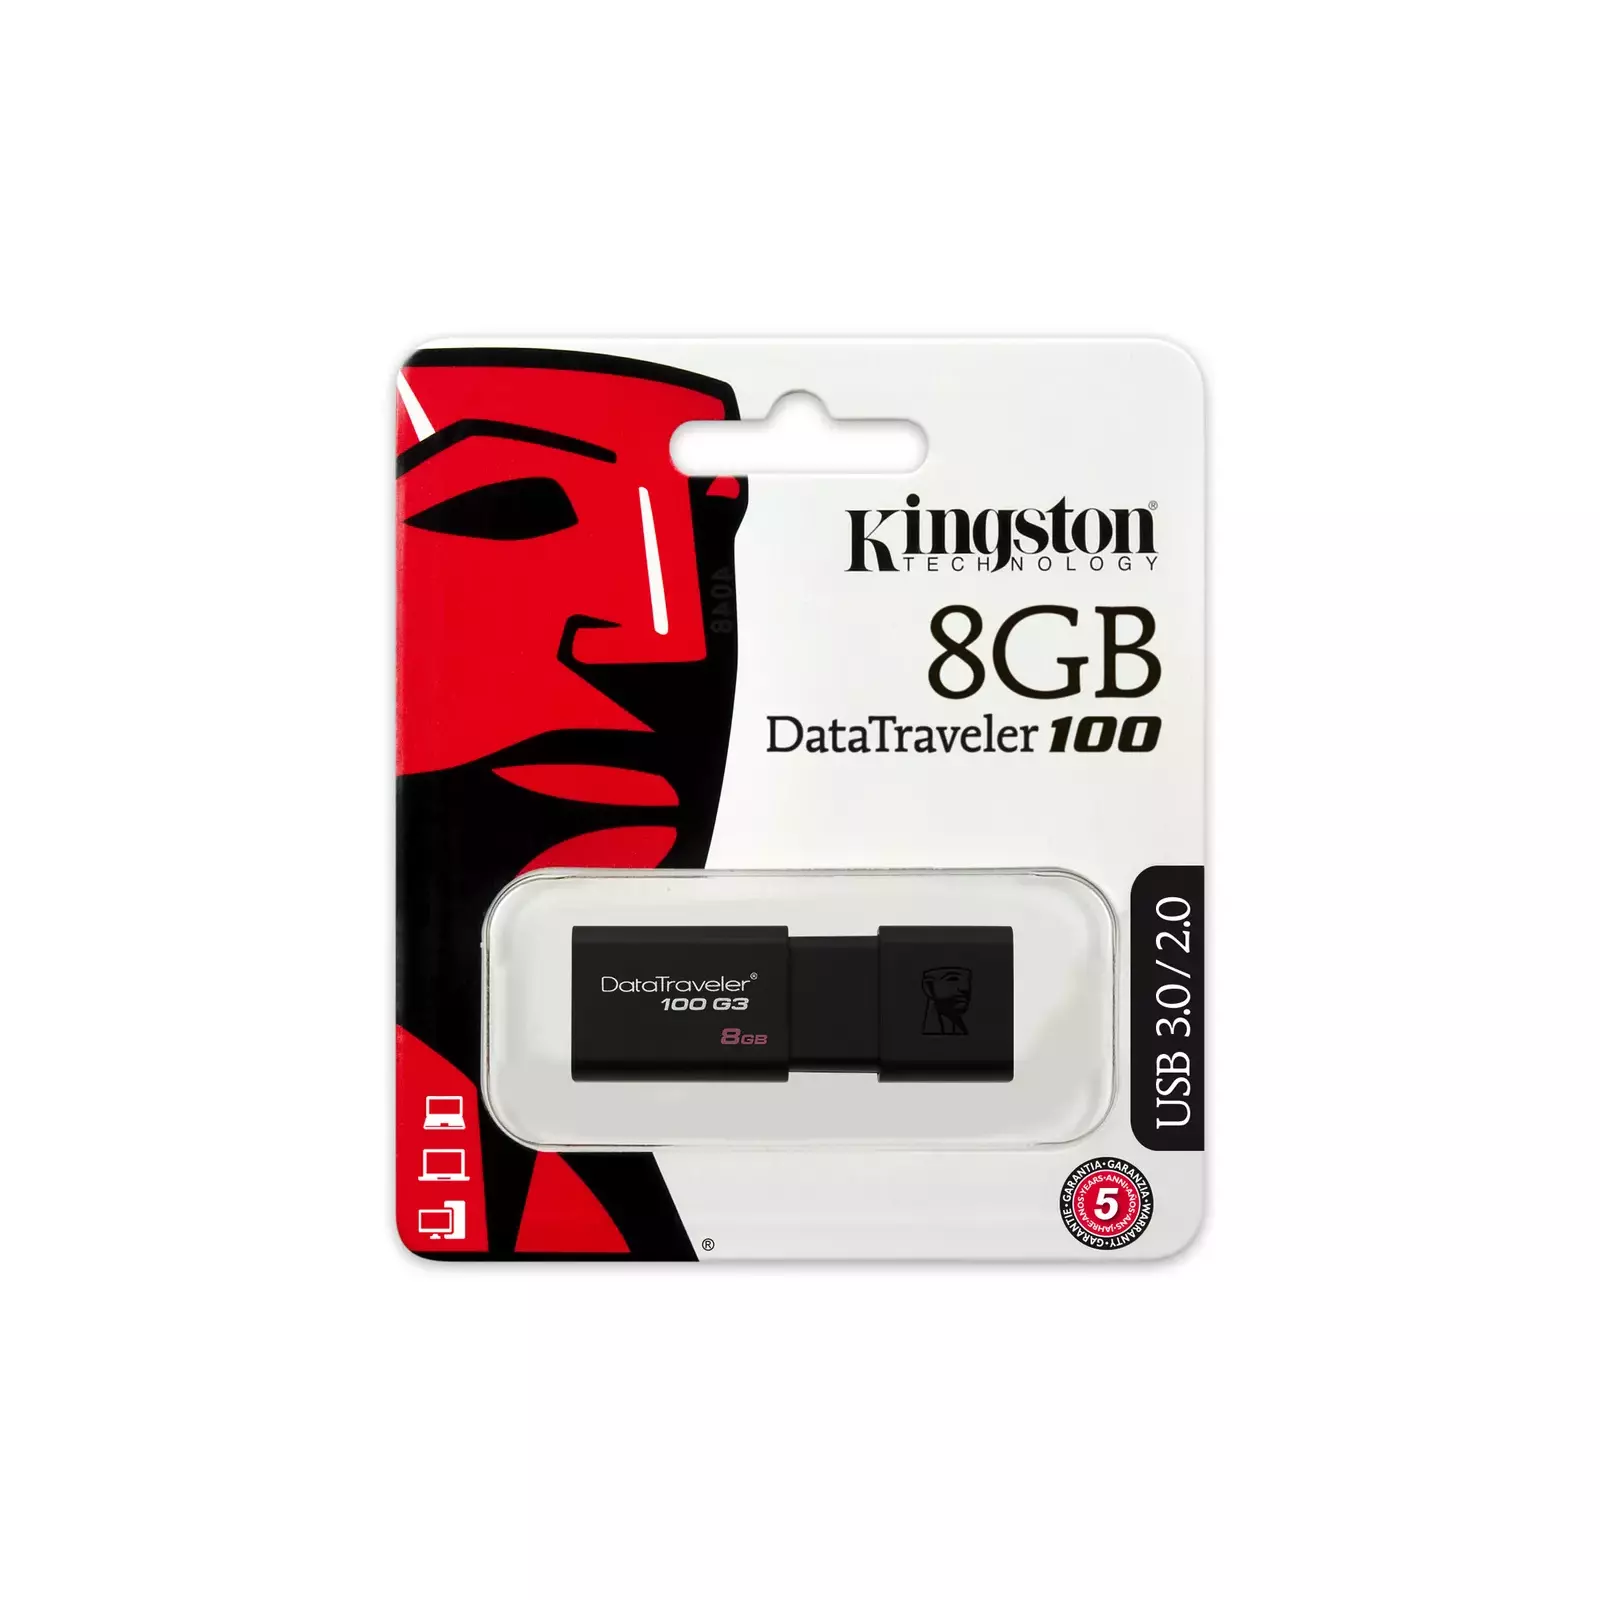 KINGSTON DT100G3/8GB Photo 3